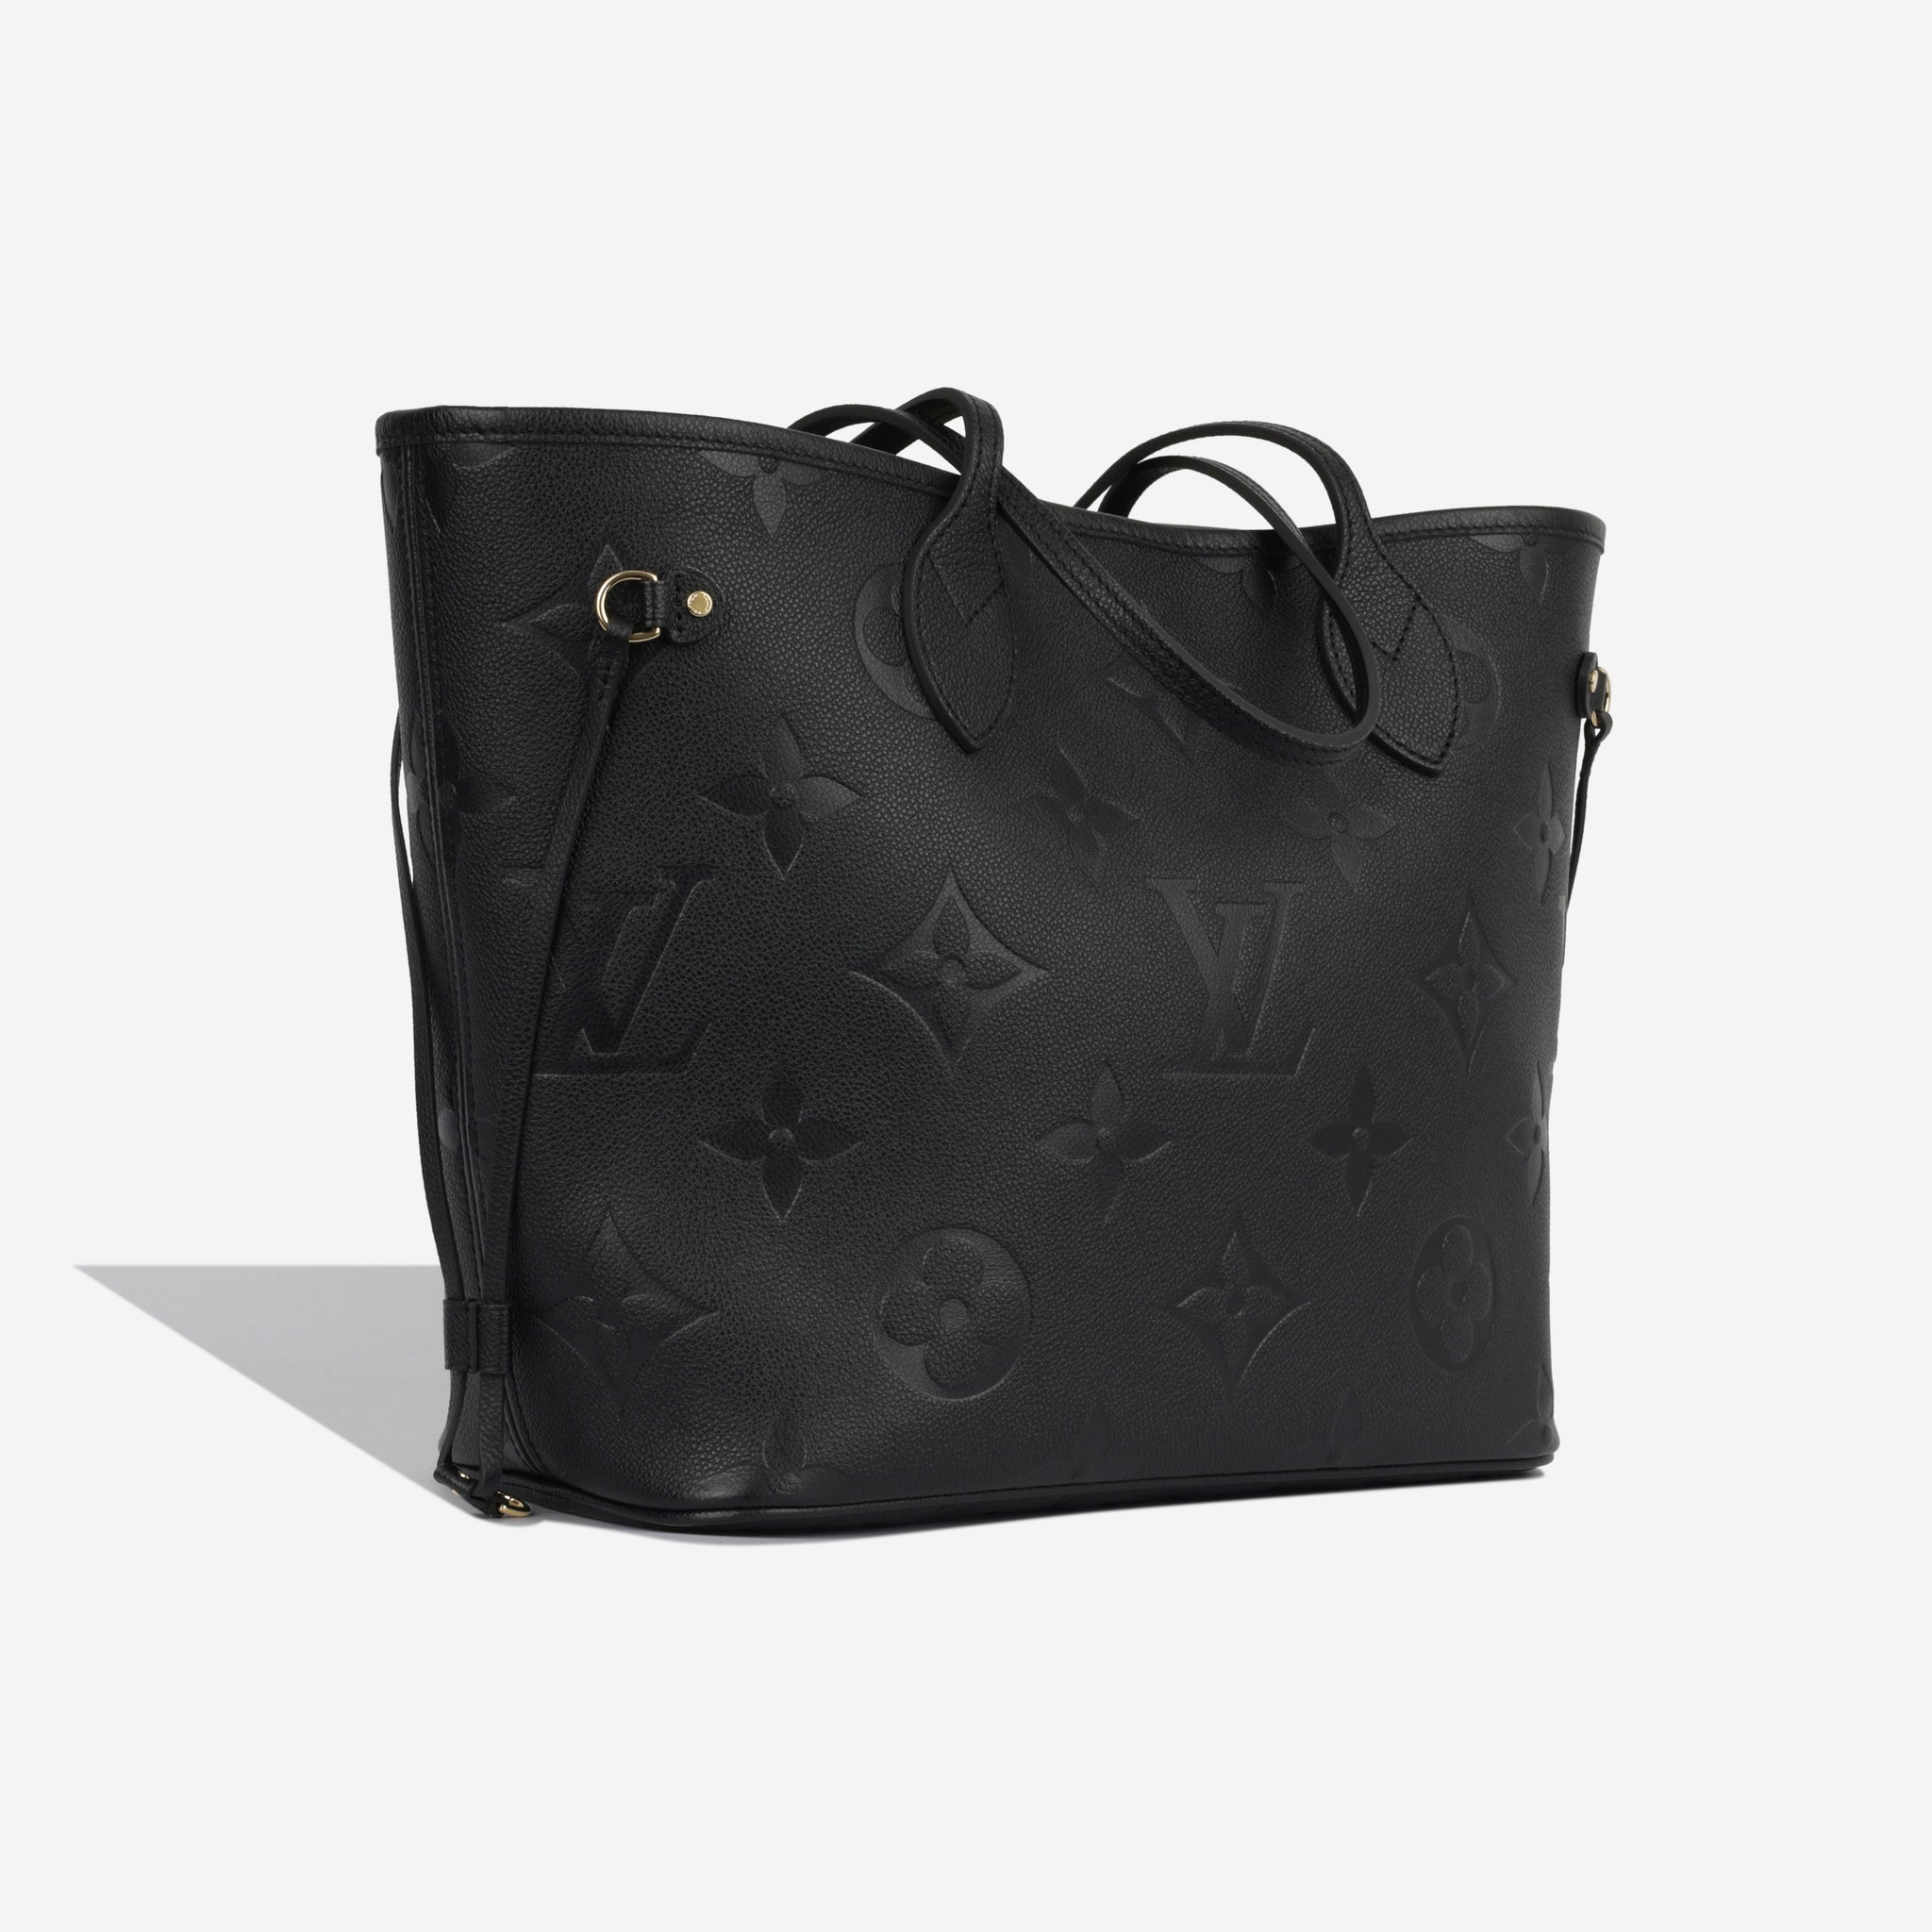 Authentic Louis Vuitton MM Neverfull Monogram Black